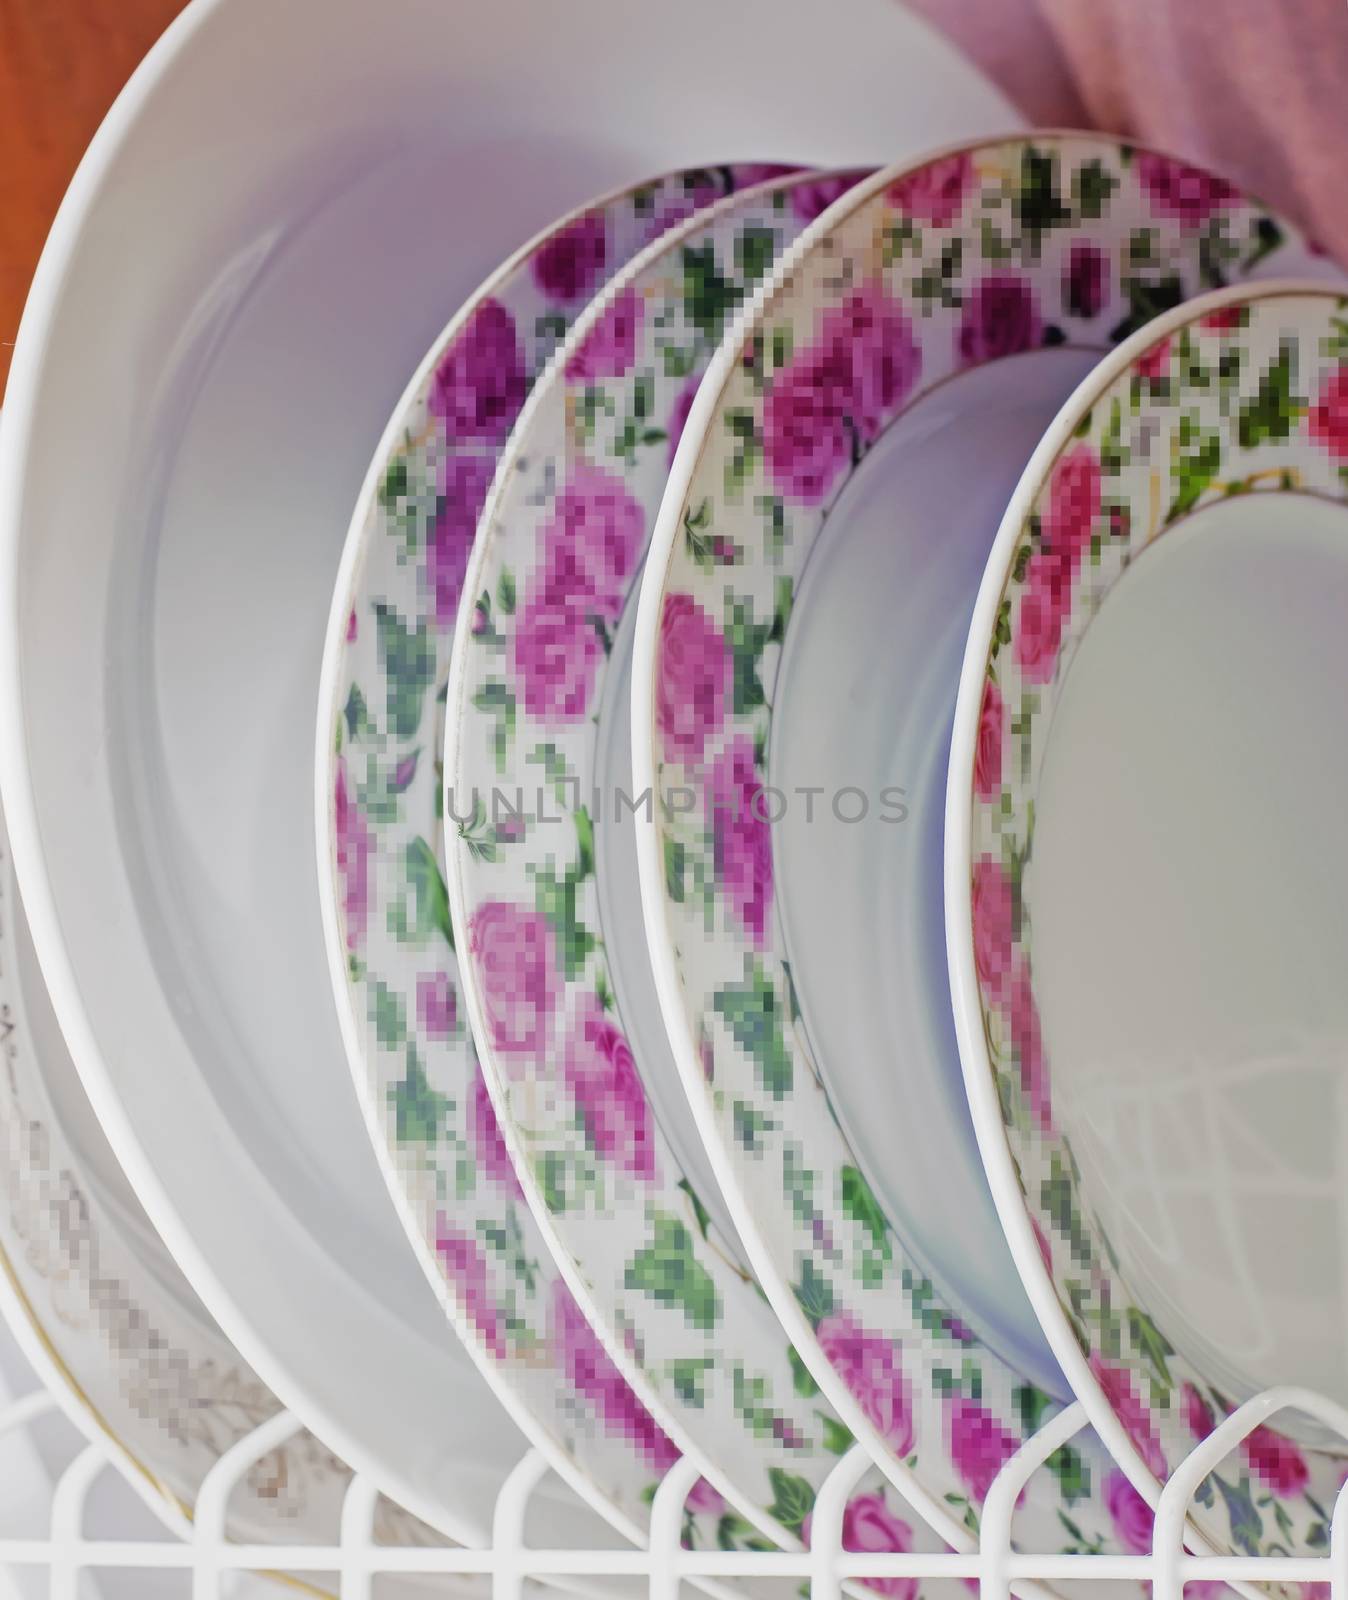 Washed plates stacked vertically by KoliadzynskaIryna